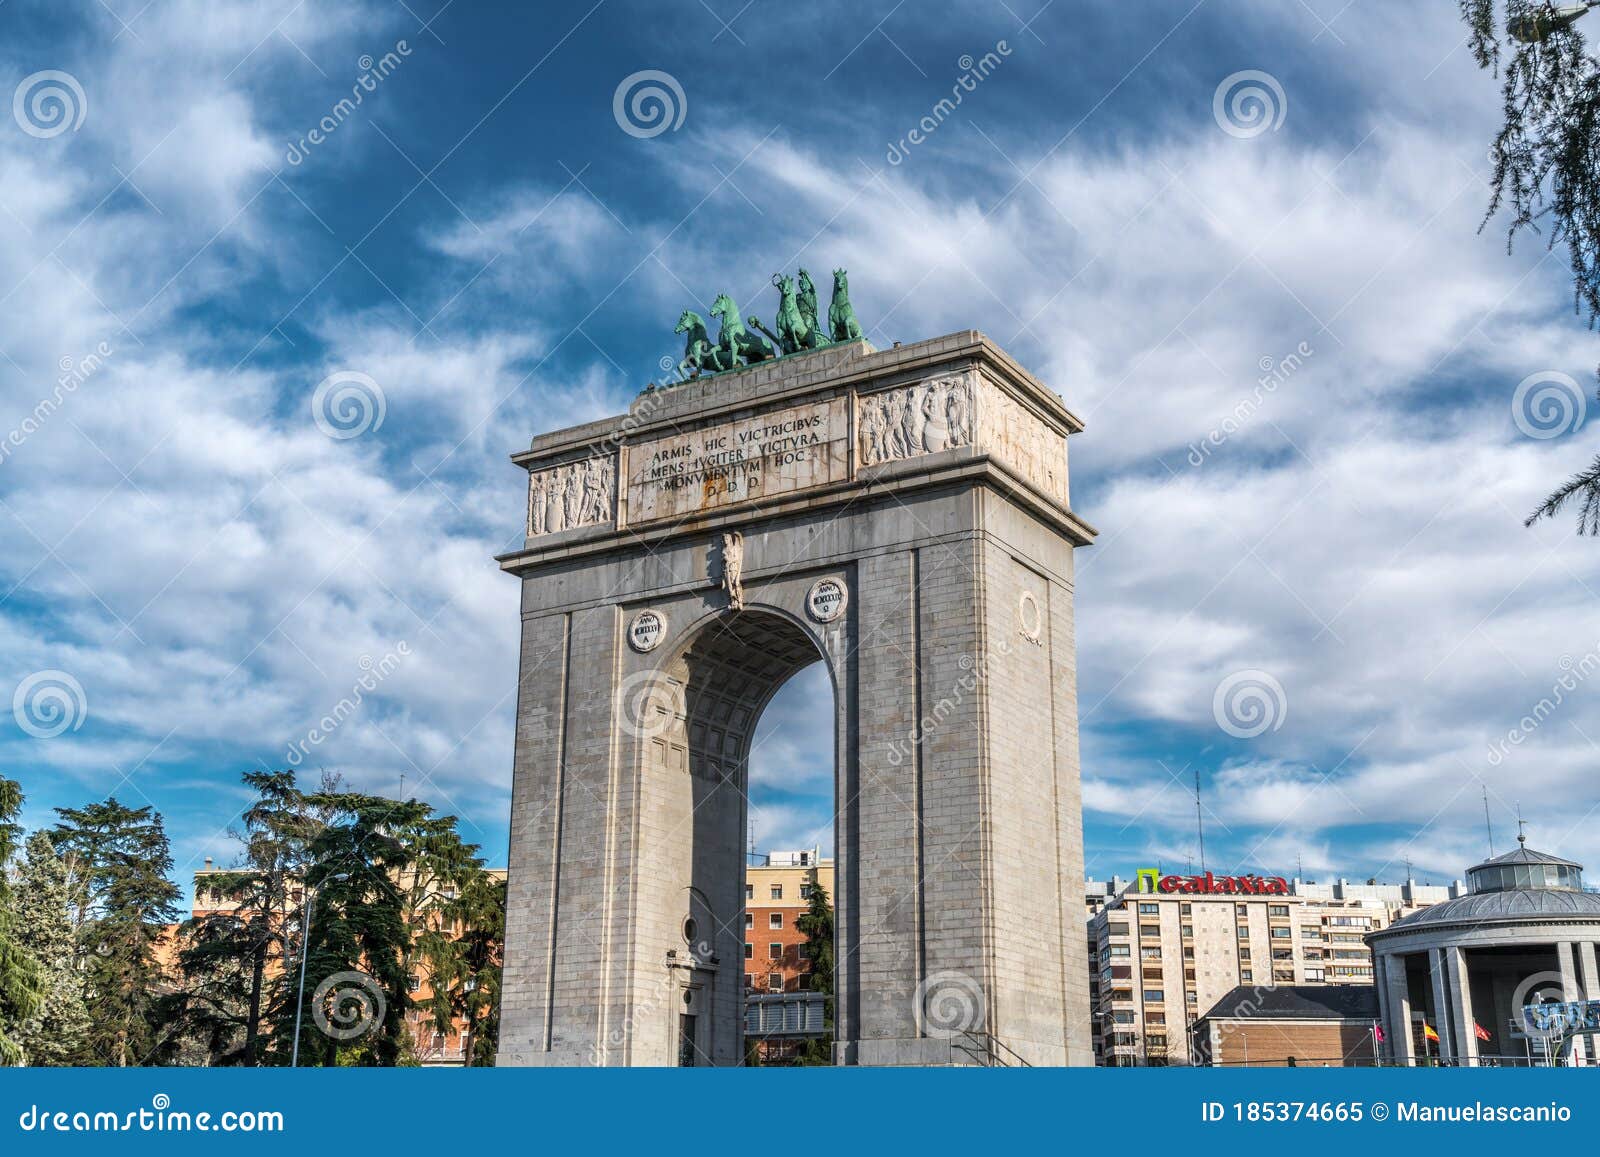 arco de la victoria triumphal arch in moncloa district of madrid, spain.